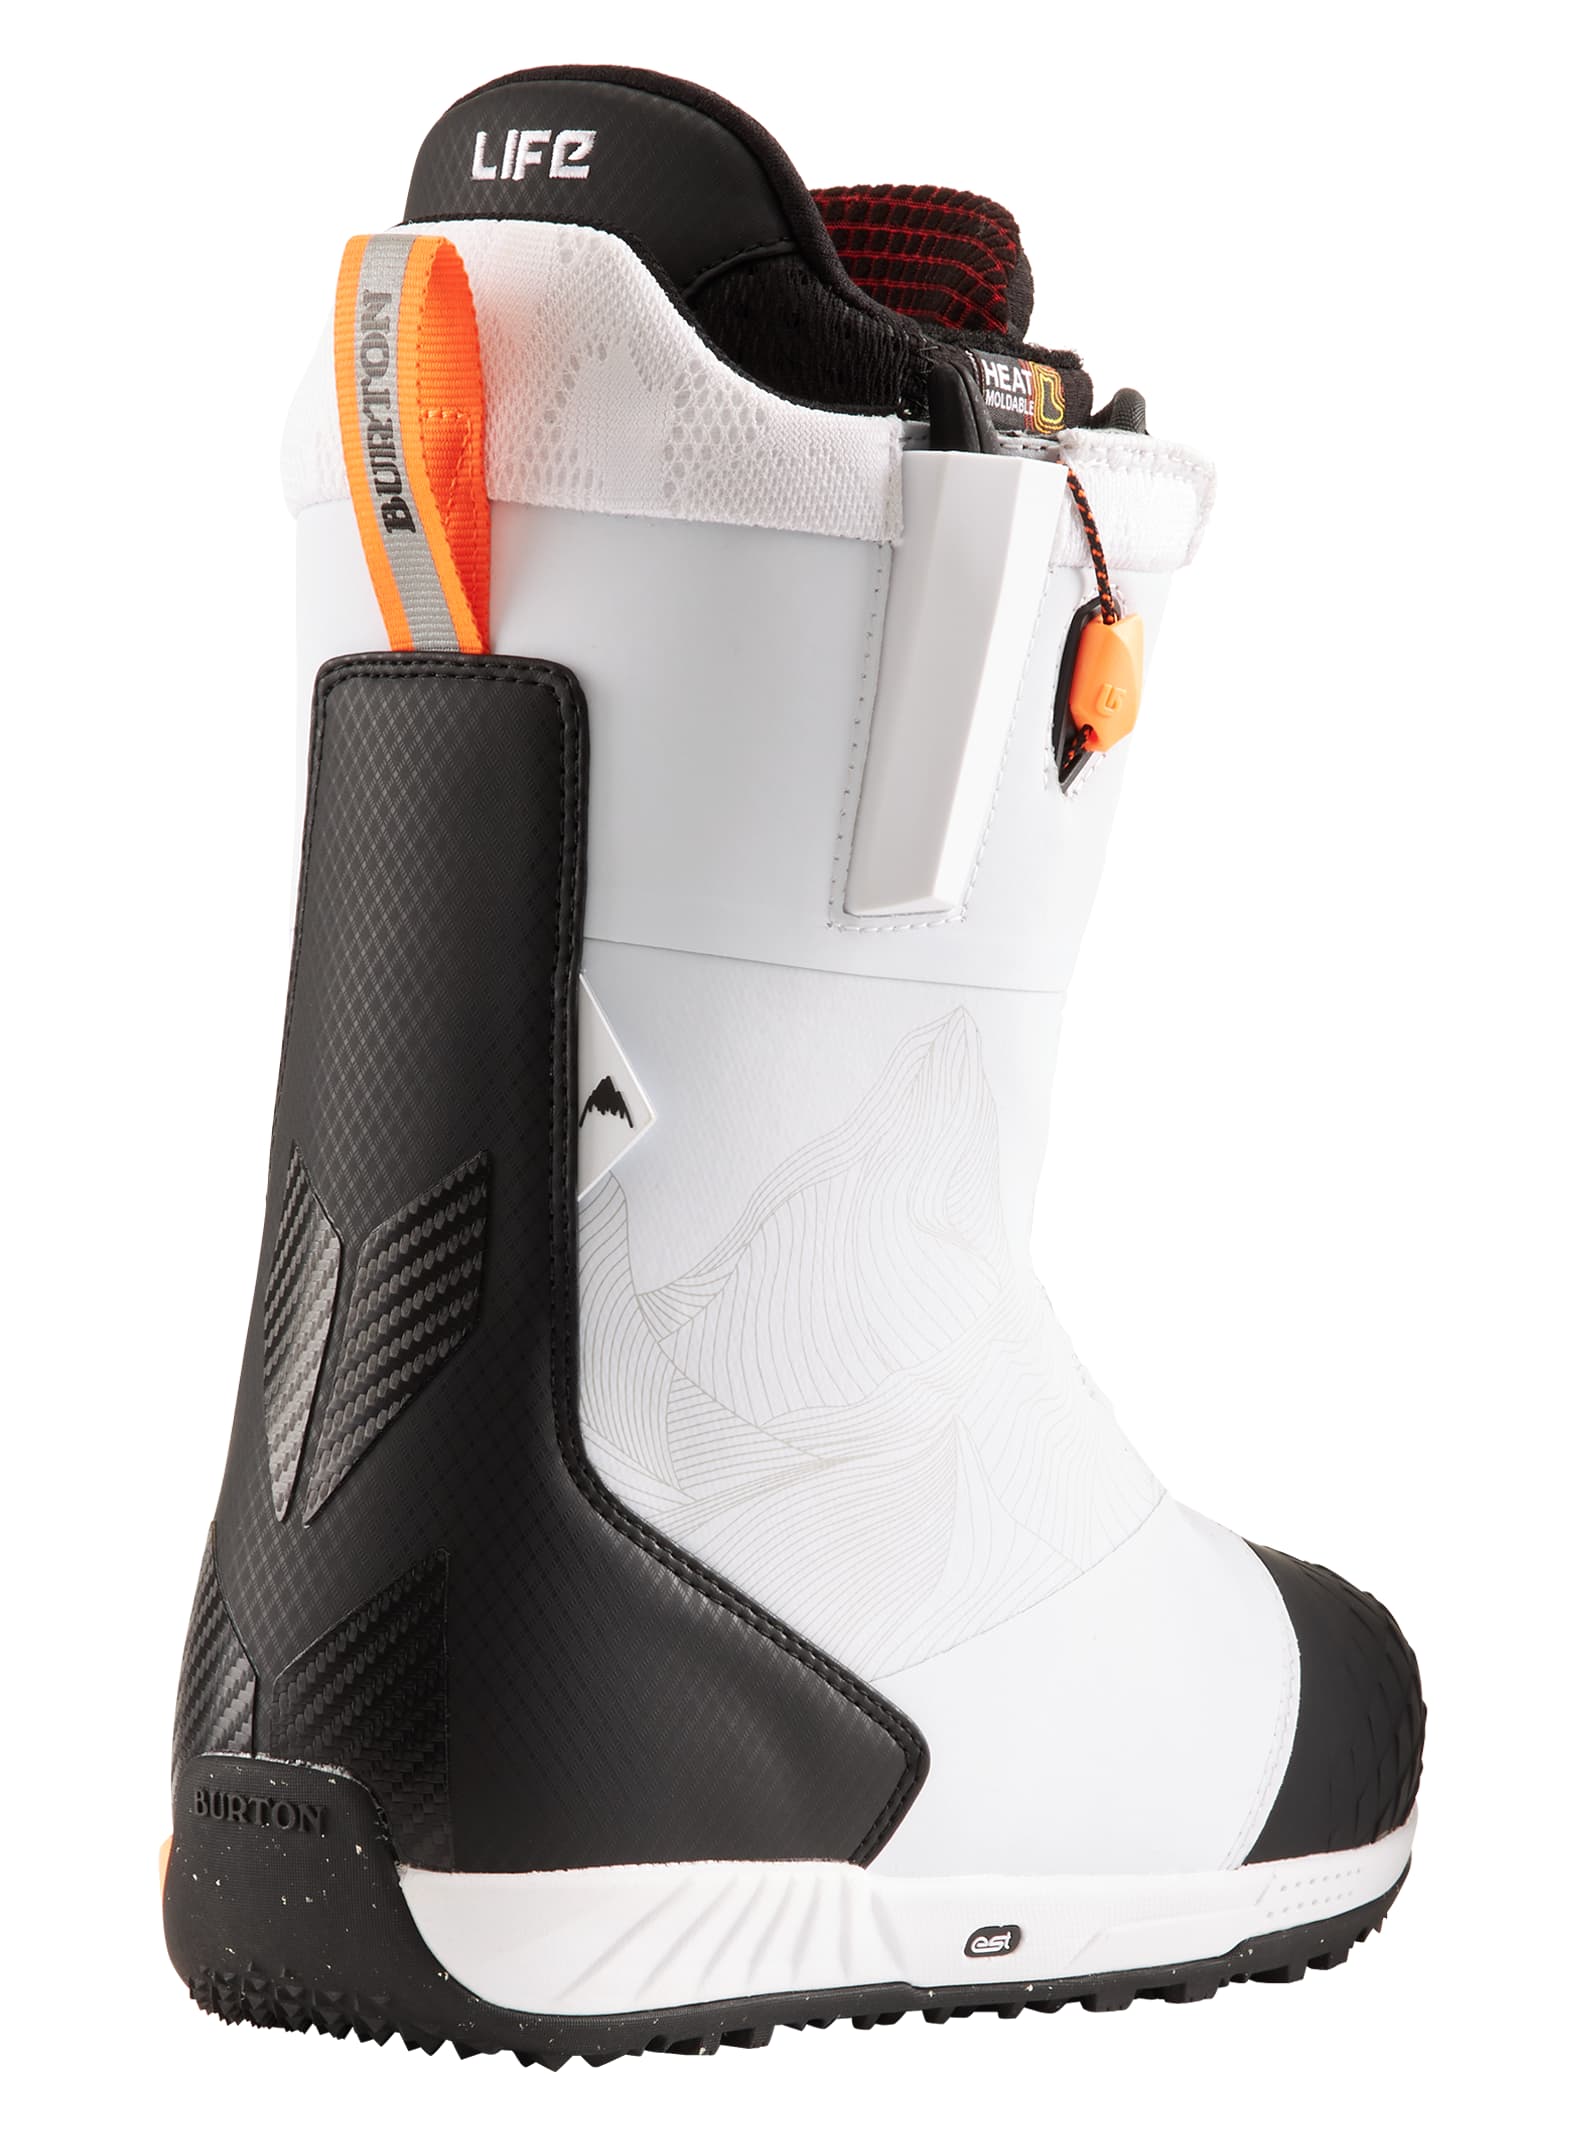 Men's Burton Ion Snowboard Boots | Burton.com Winter 2022 US